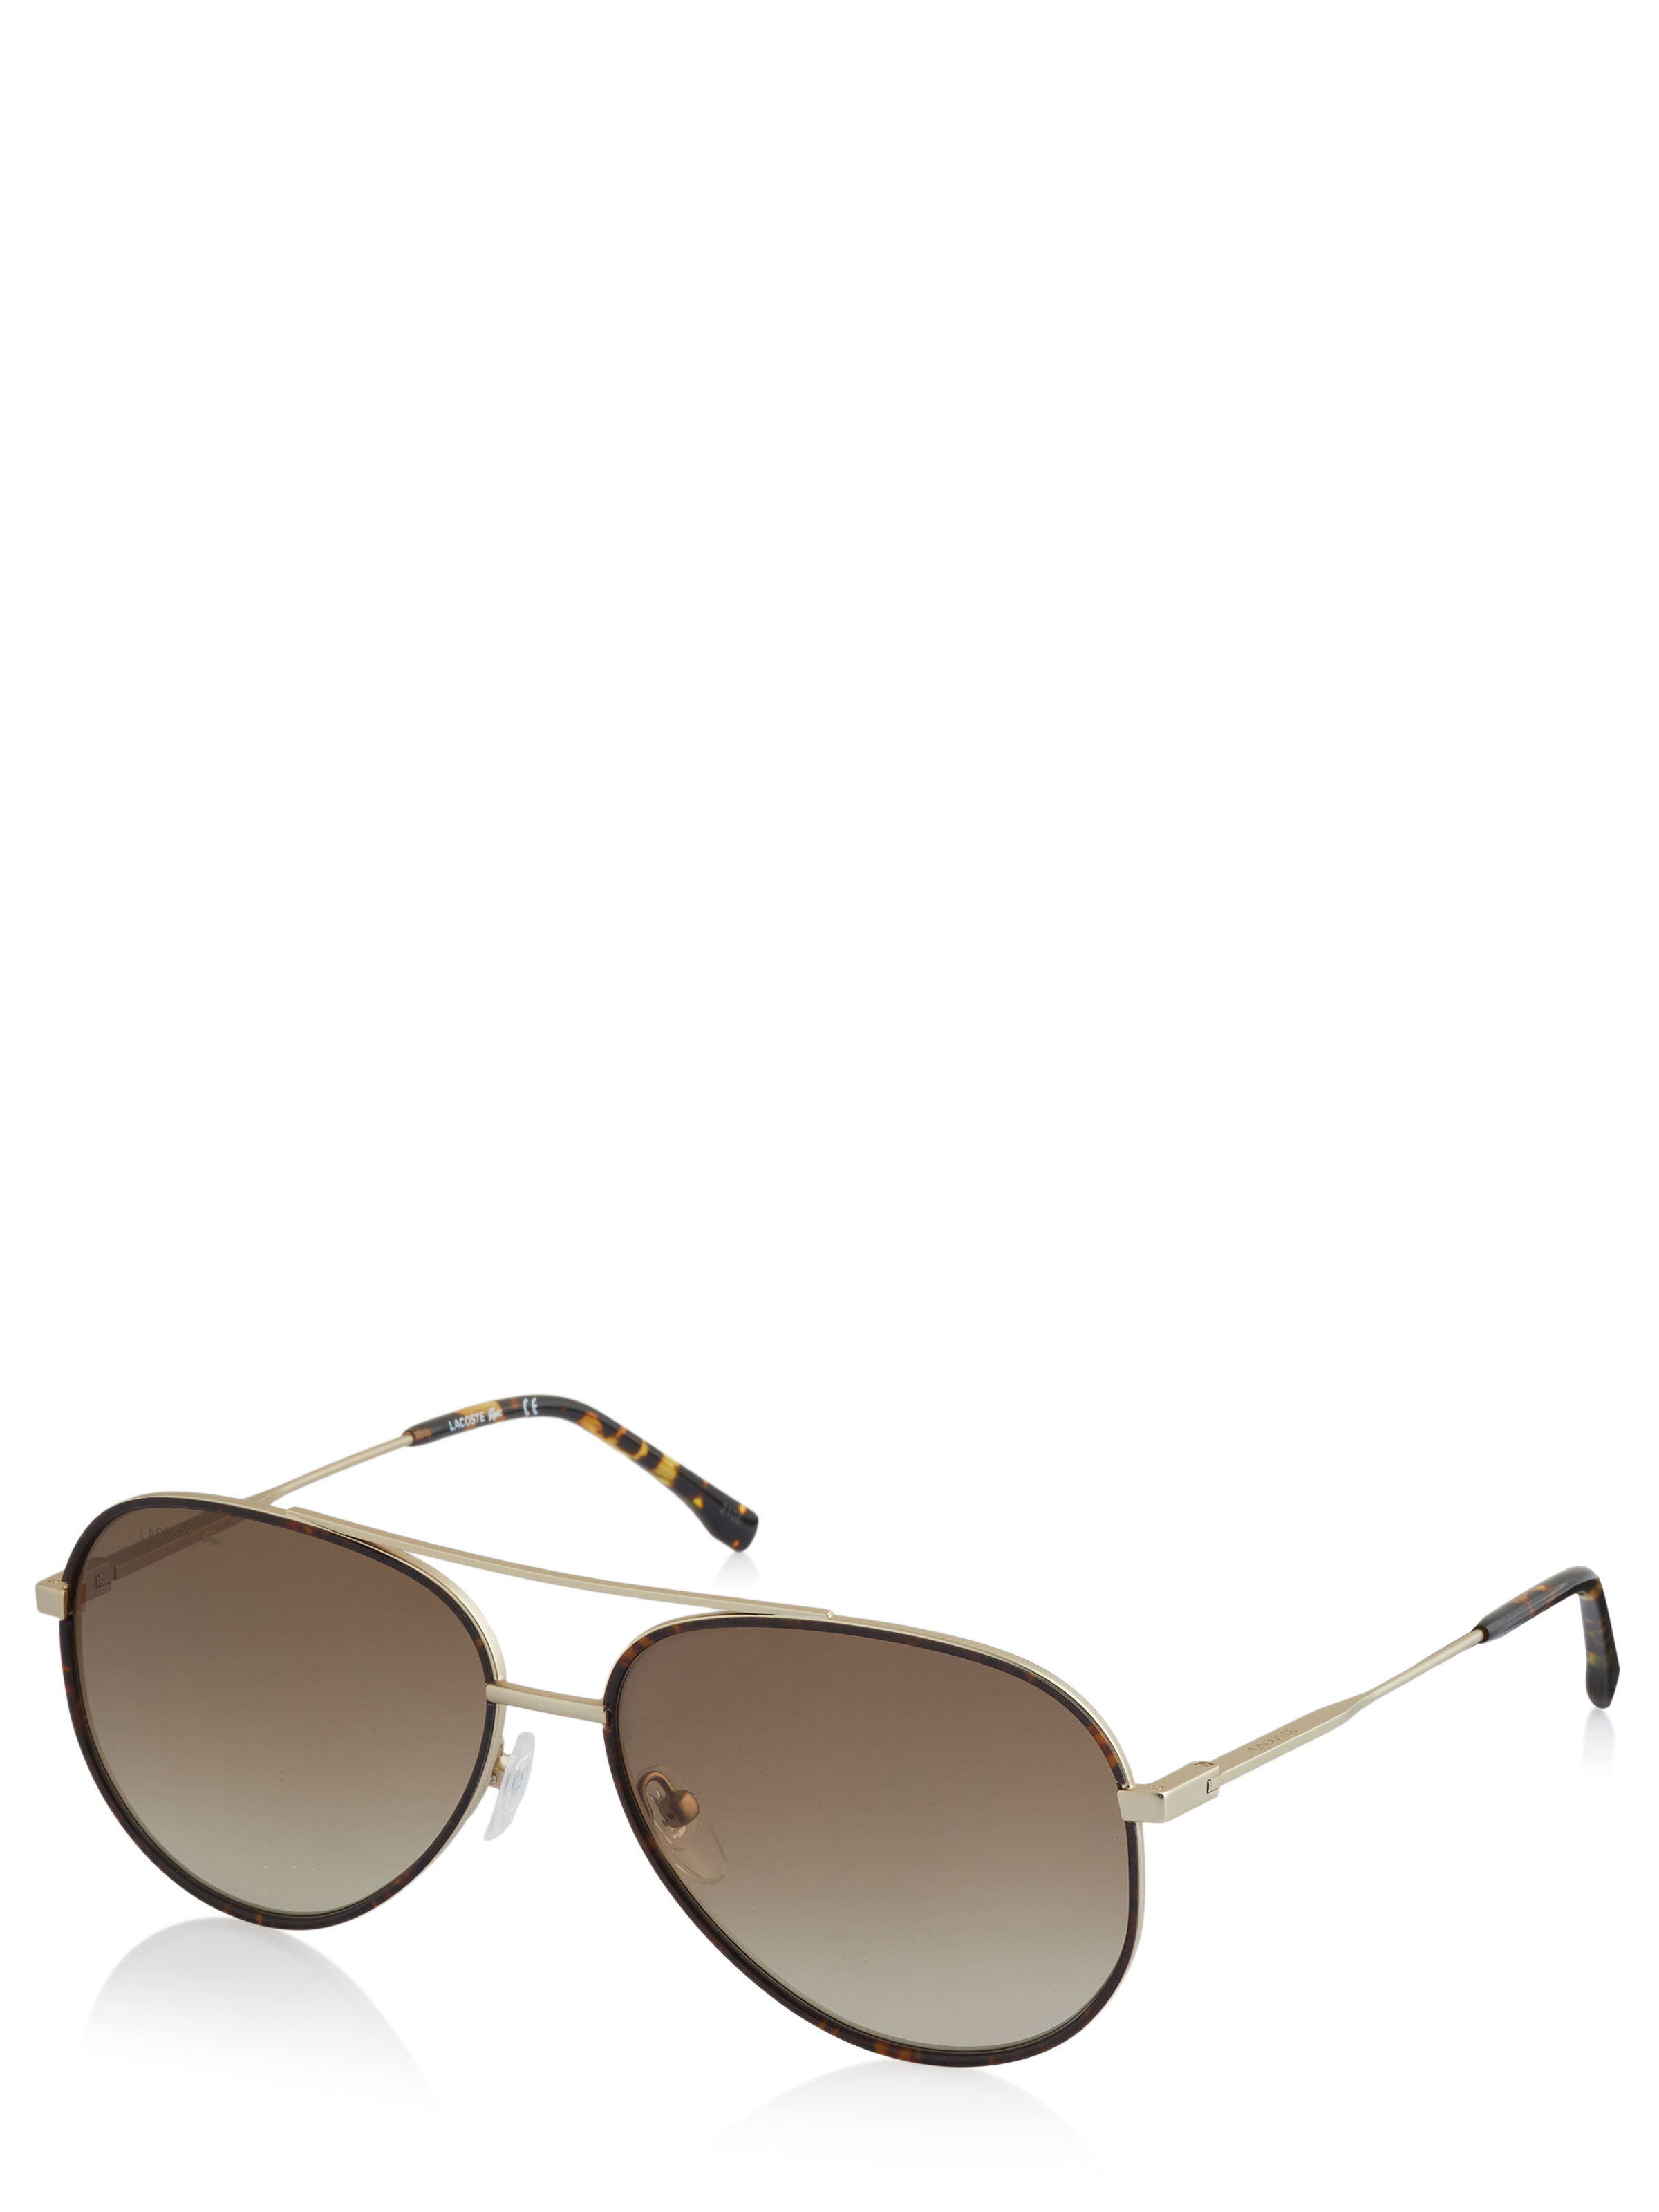 Lacoste Sunglasses L162S 714 Gold Brown Gradient – Discounted Sunglasses